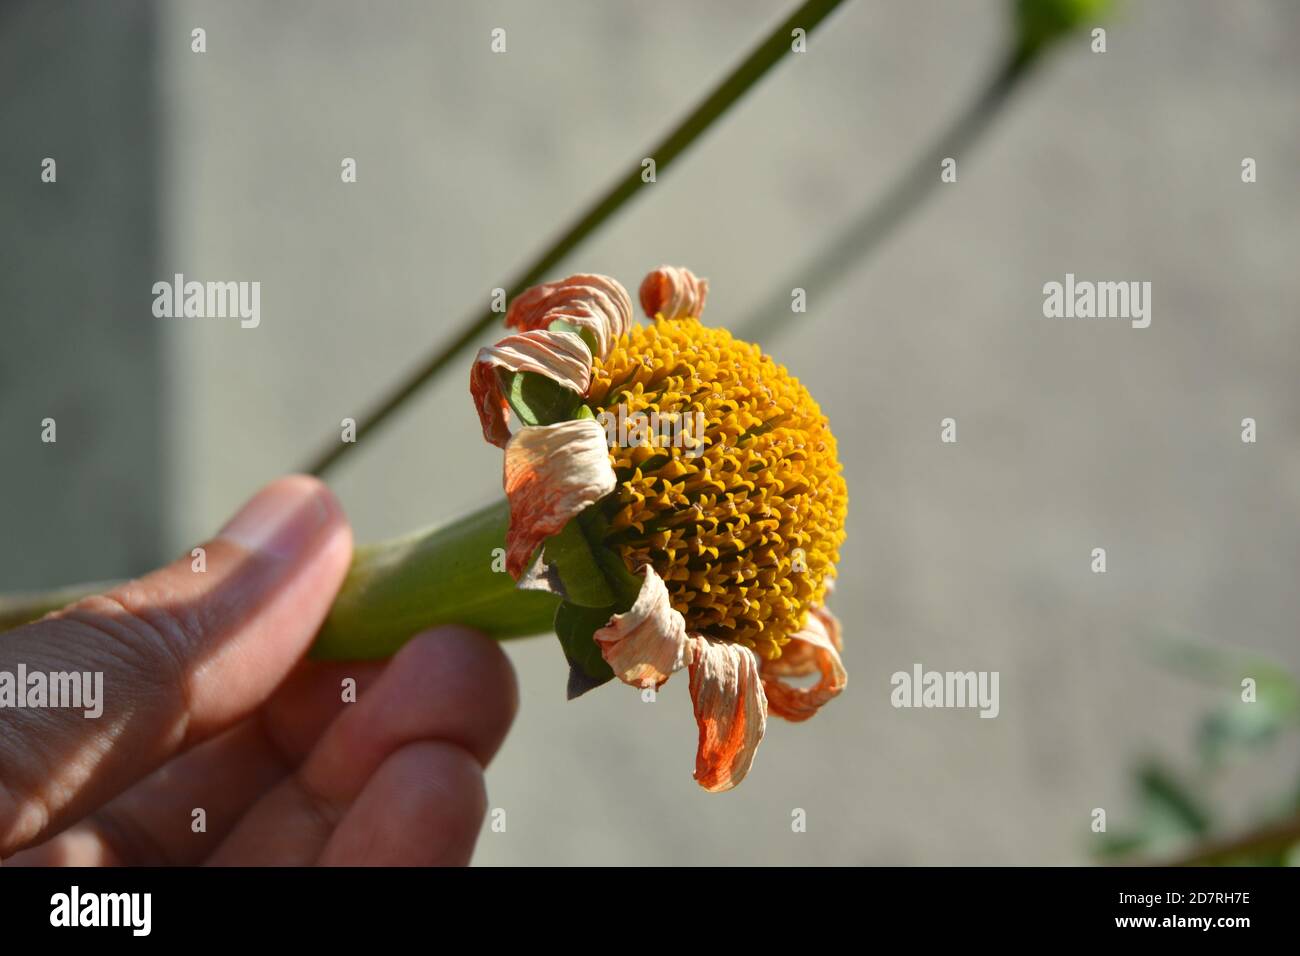 Red sunflower in the garden. Stock Photo